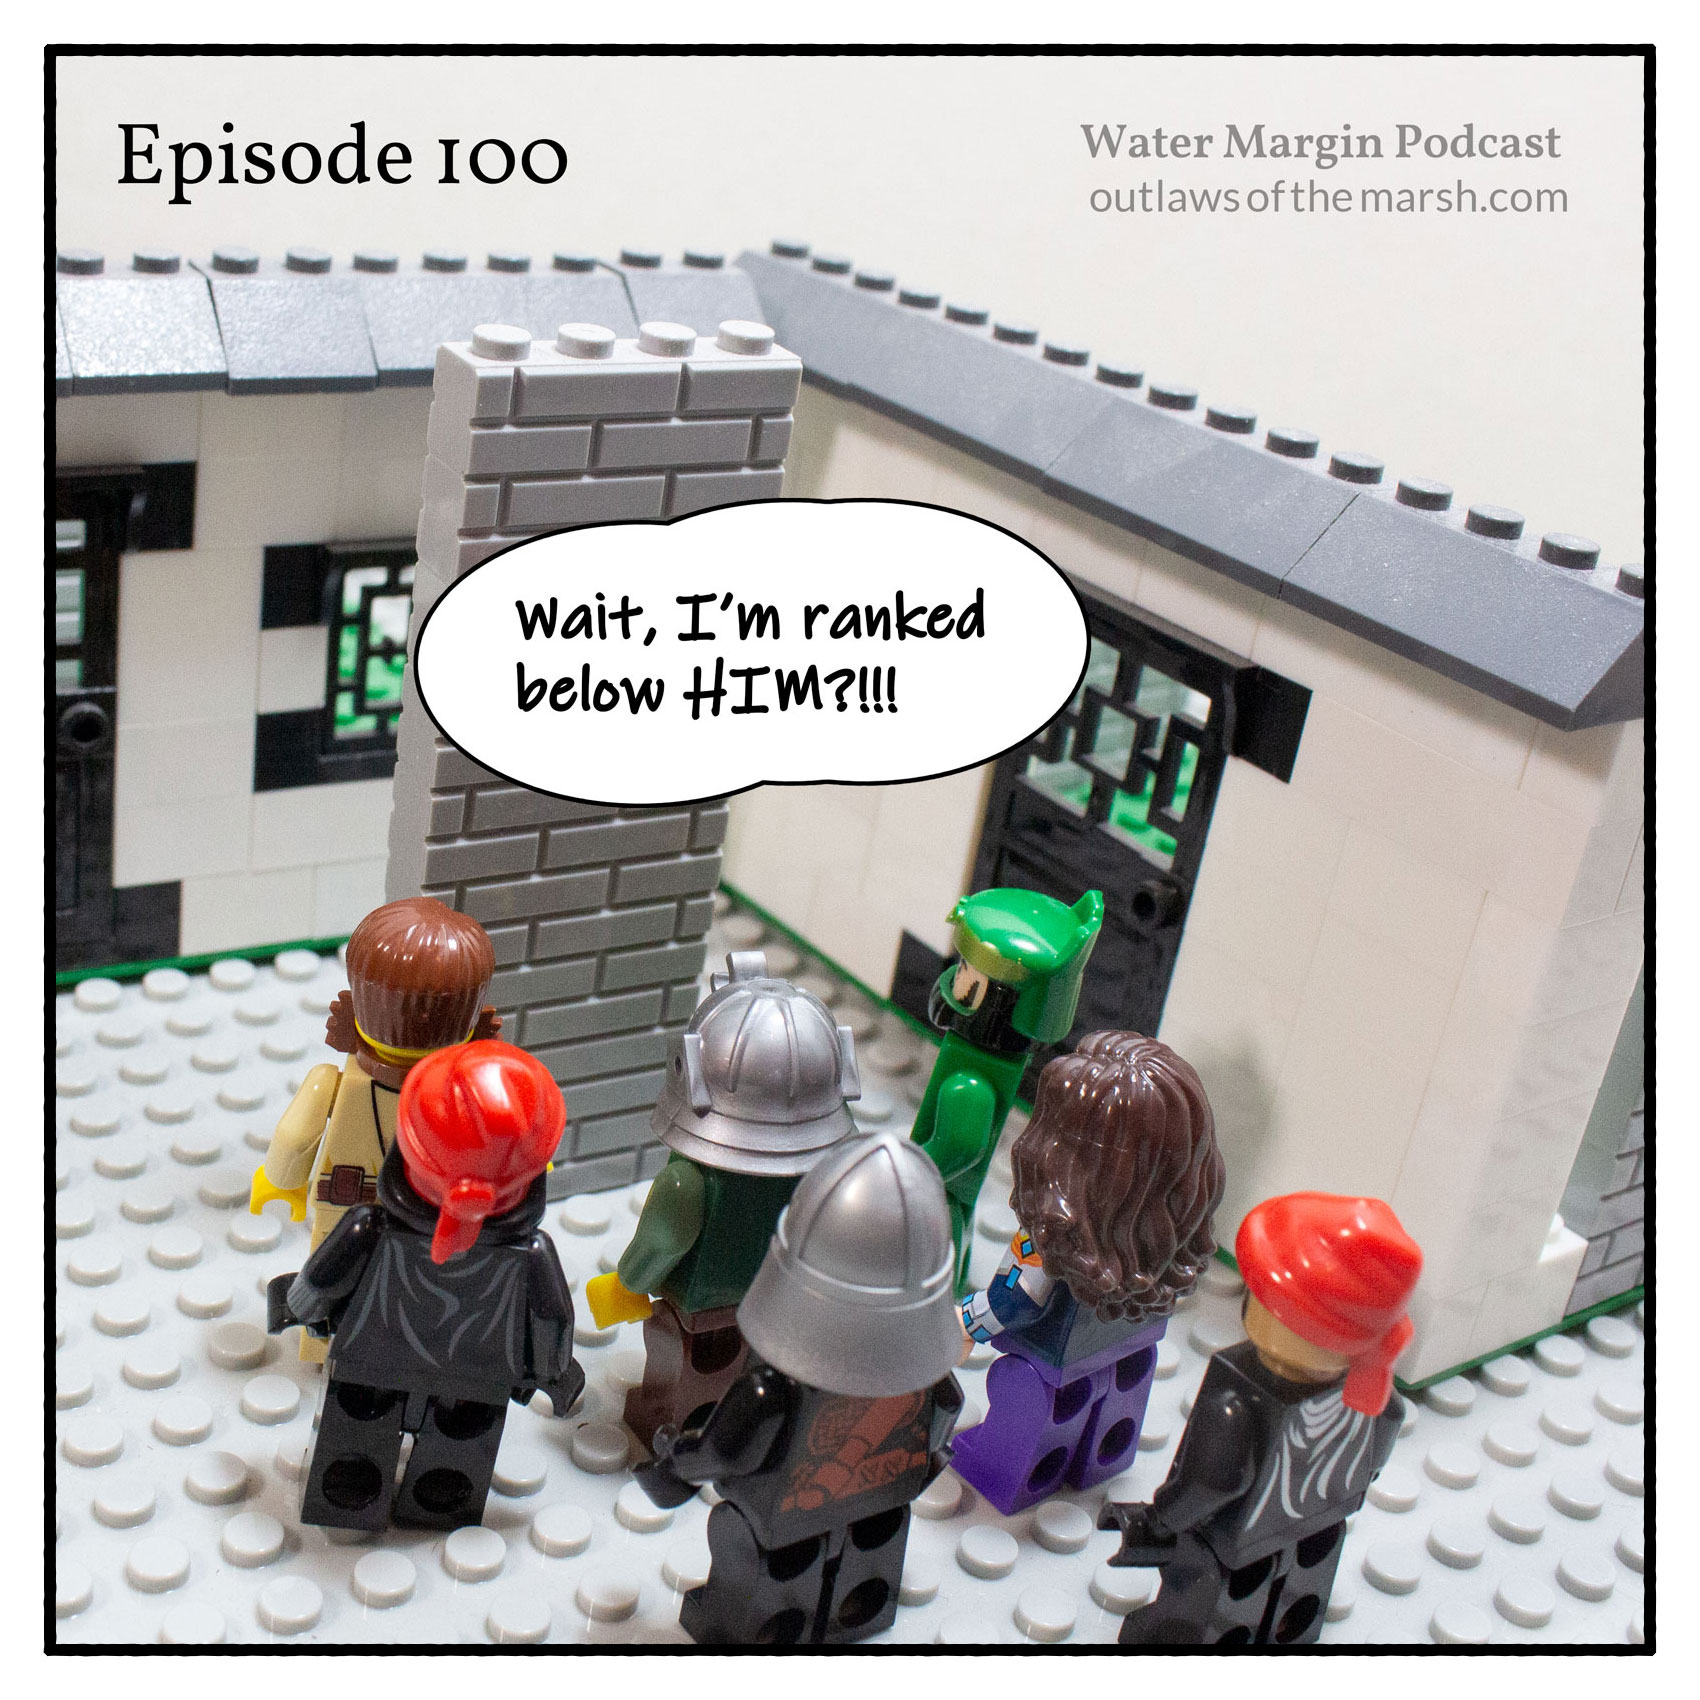 Water Margin Podcast: Episode 100